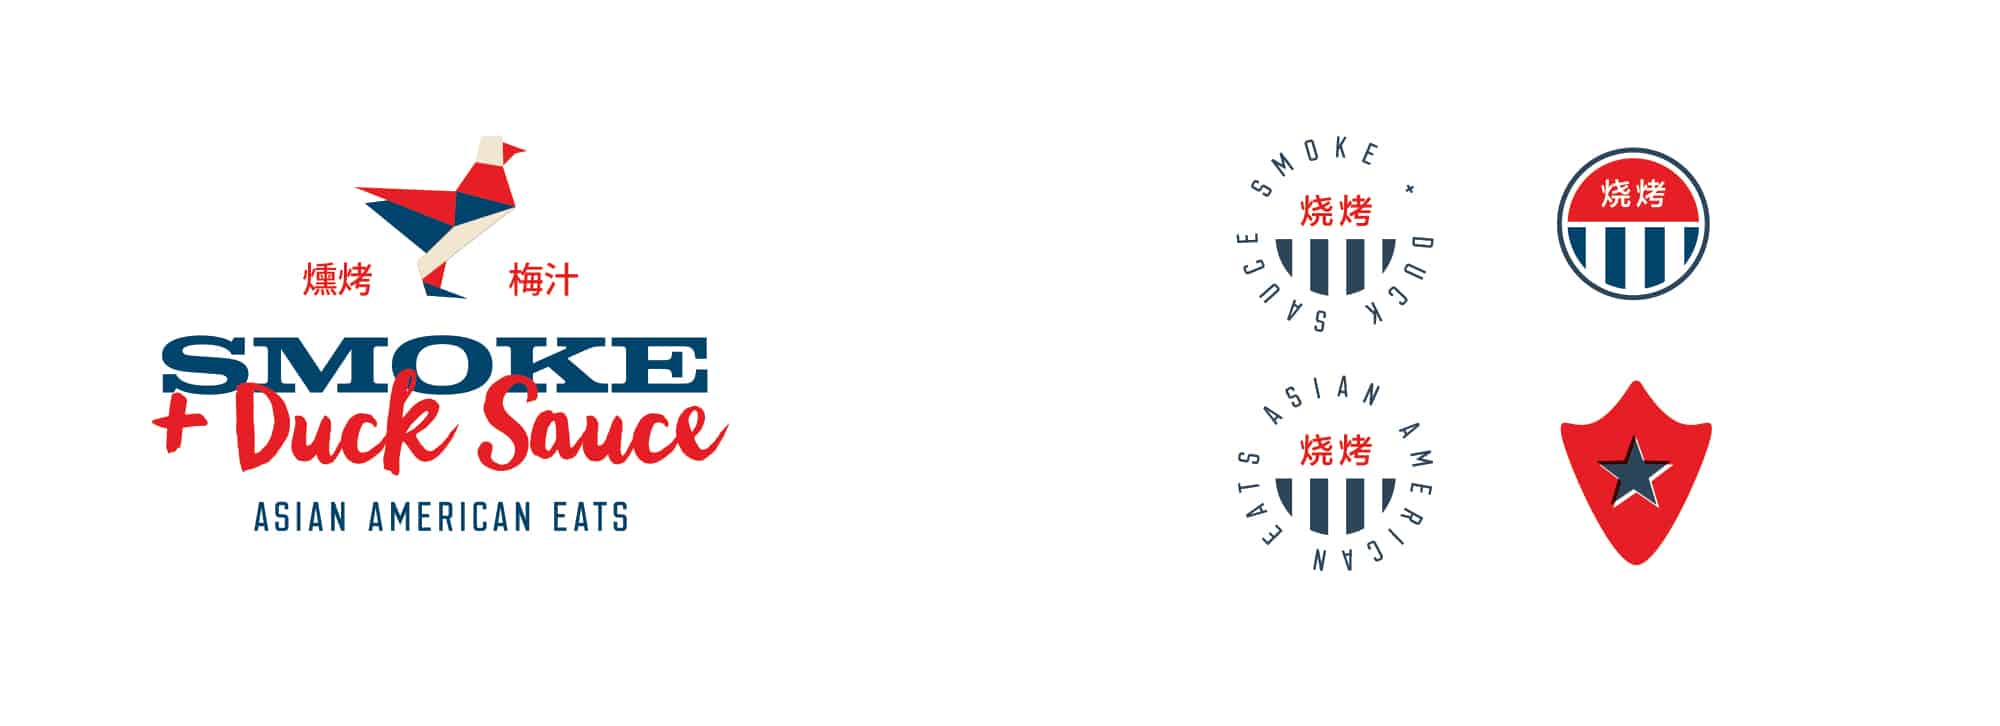 Smoke & Duck Sauce asian fusion fast casual restaurant branding and concept development design logo design